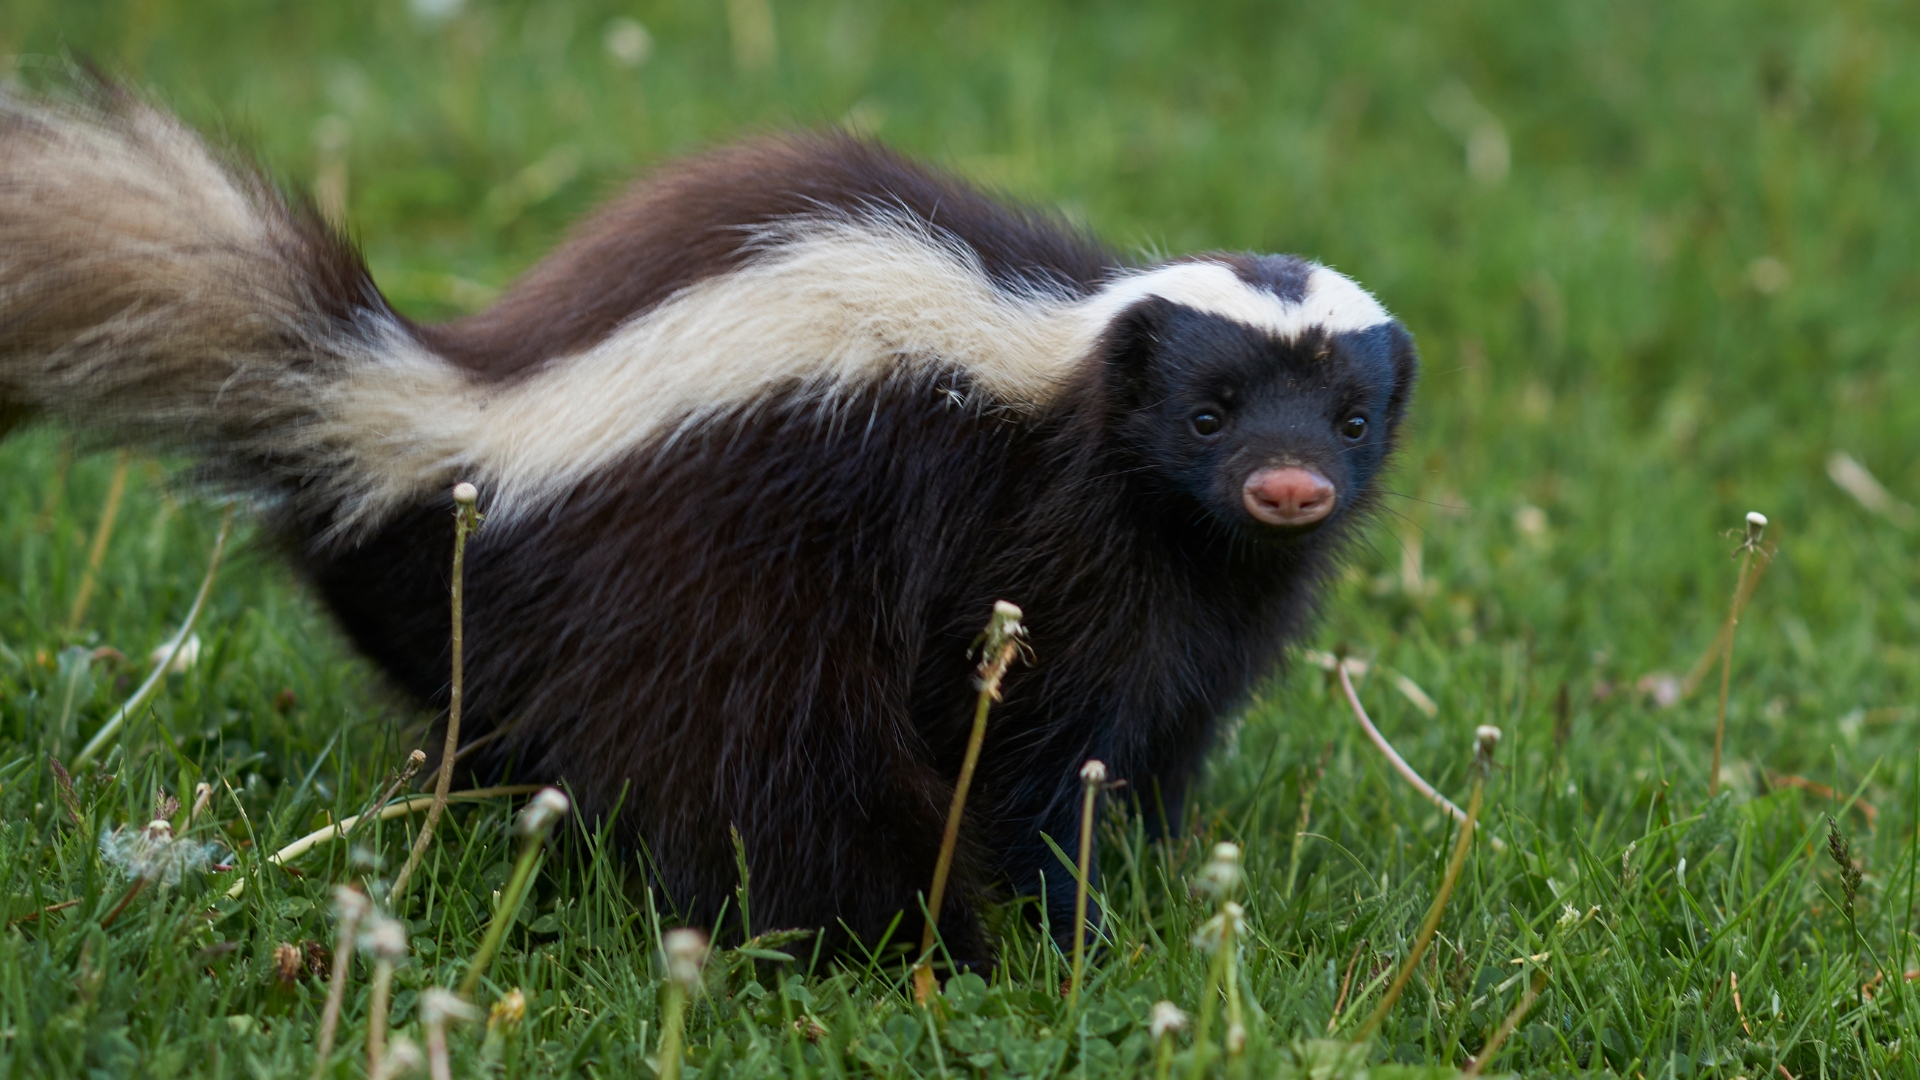 skunk on grass